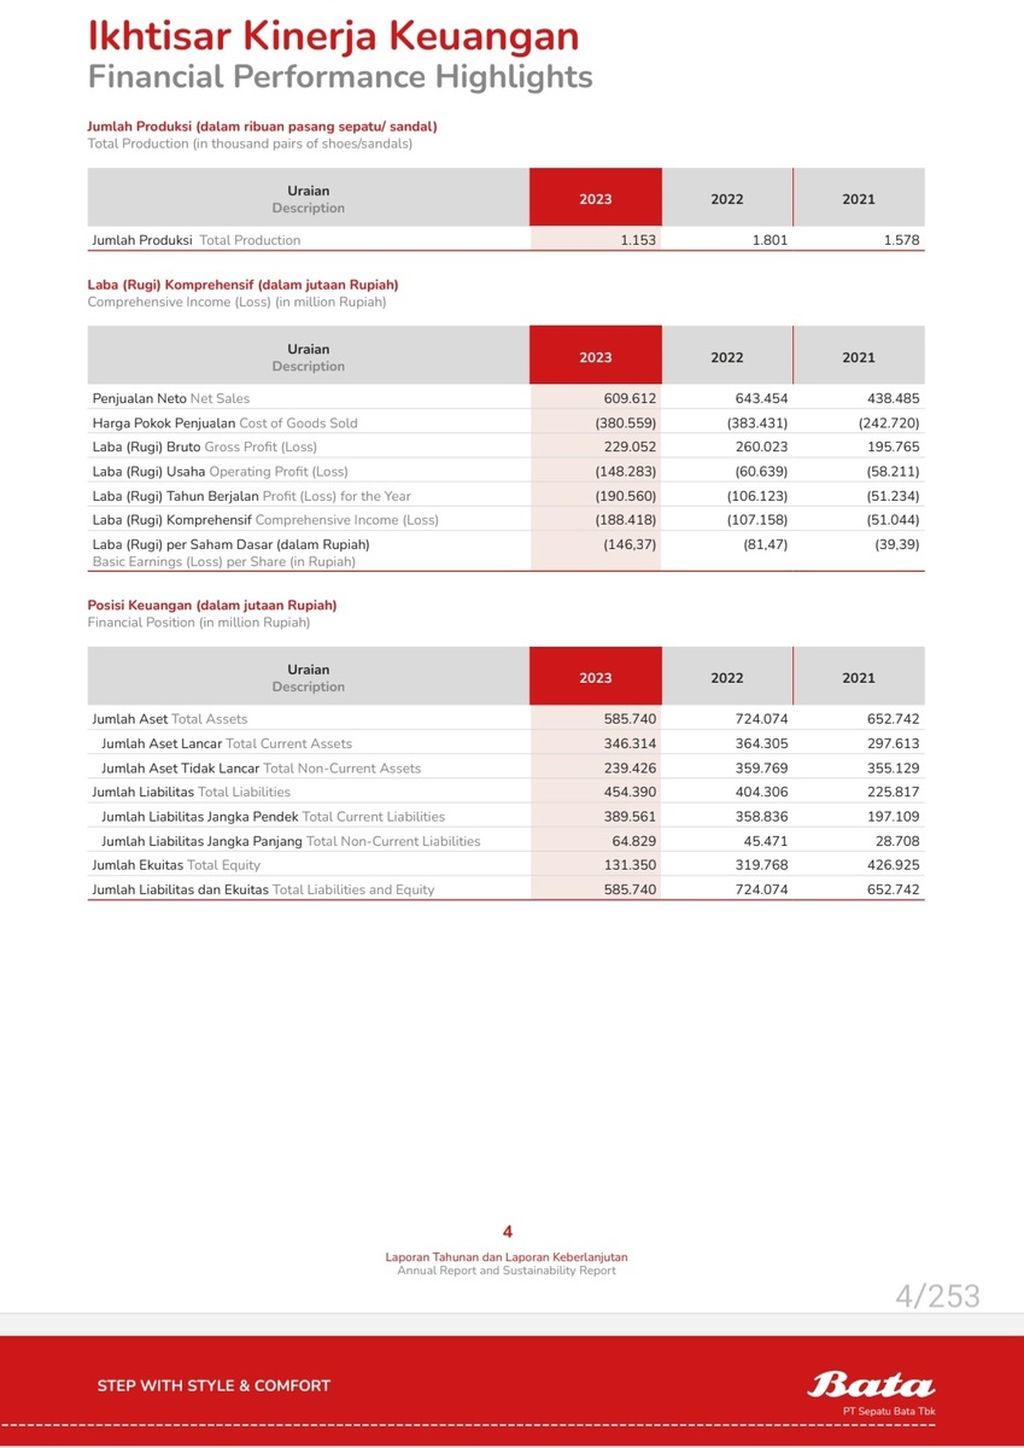 Ikhtisar Keuangan Bata 2023 (sumber: Laporan Tahunan Bata 2023).